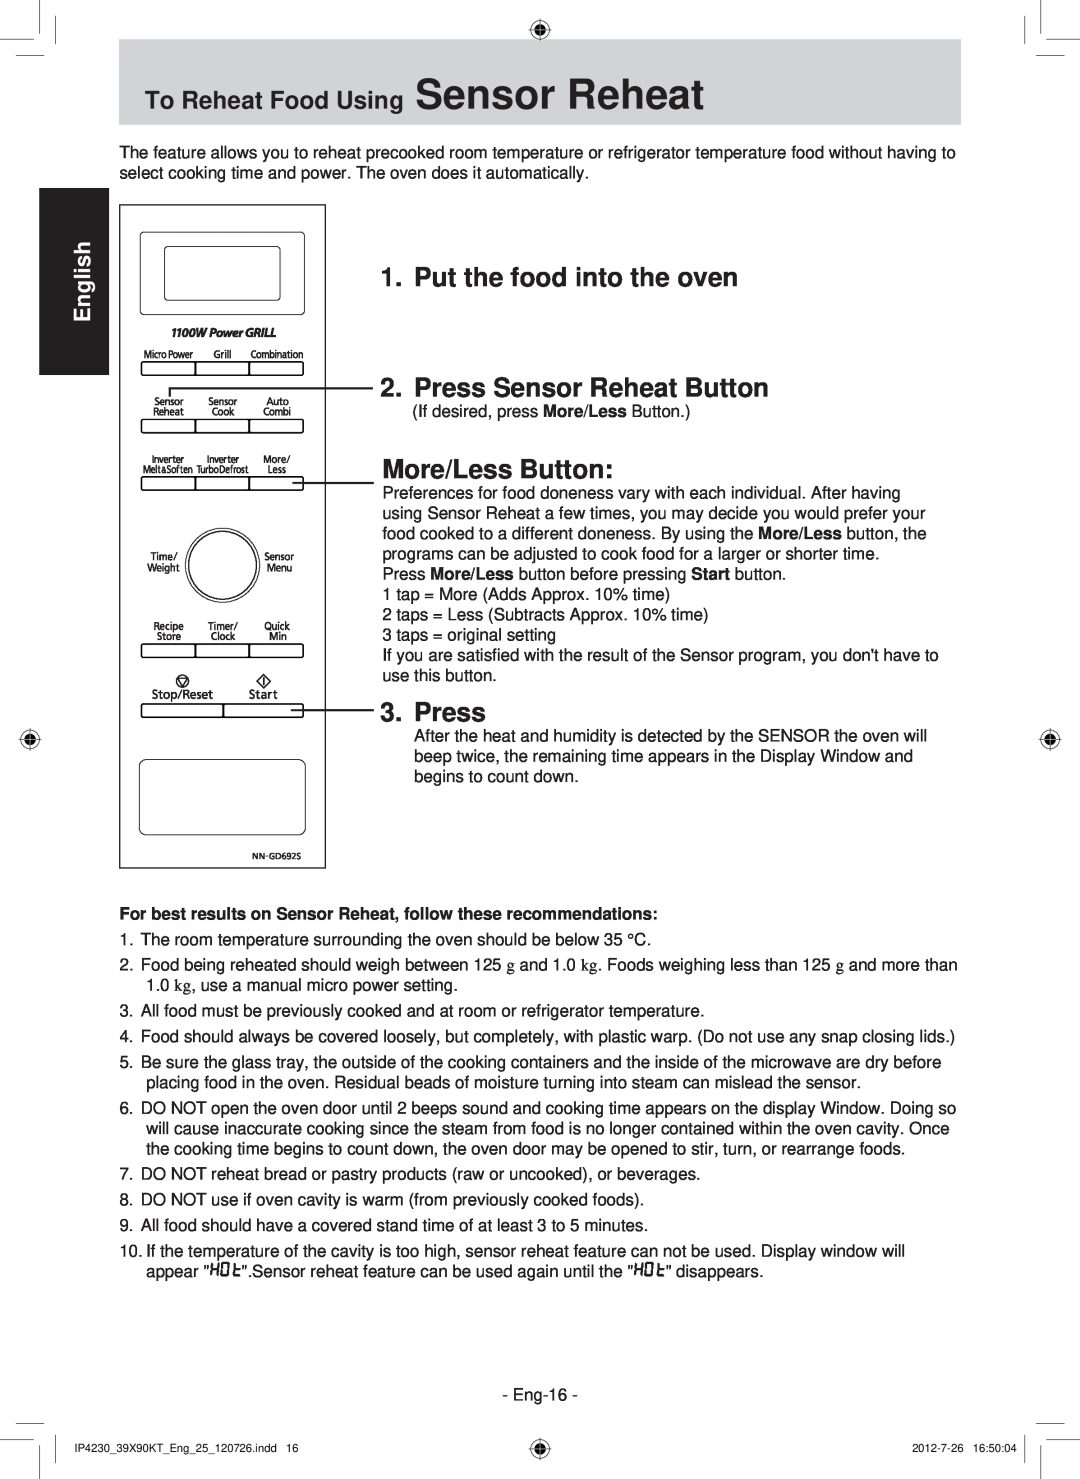 Panasonic F00039X90KT Press Sensor Reheat Button, More/Less Button, To Reheat Food Using Sensor Reheat, English 